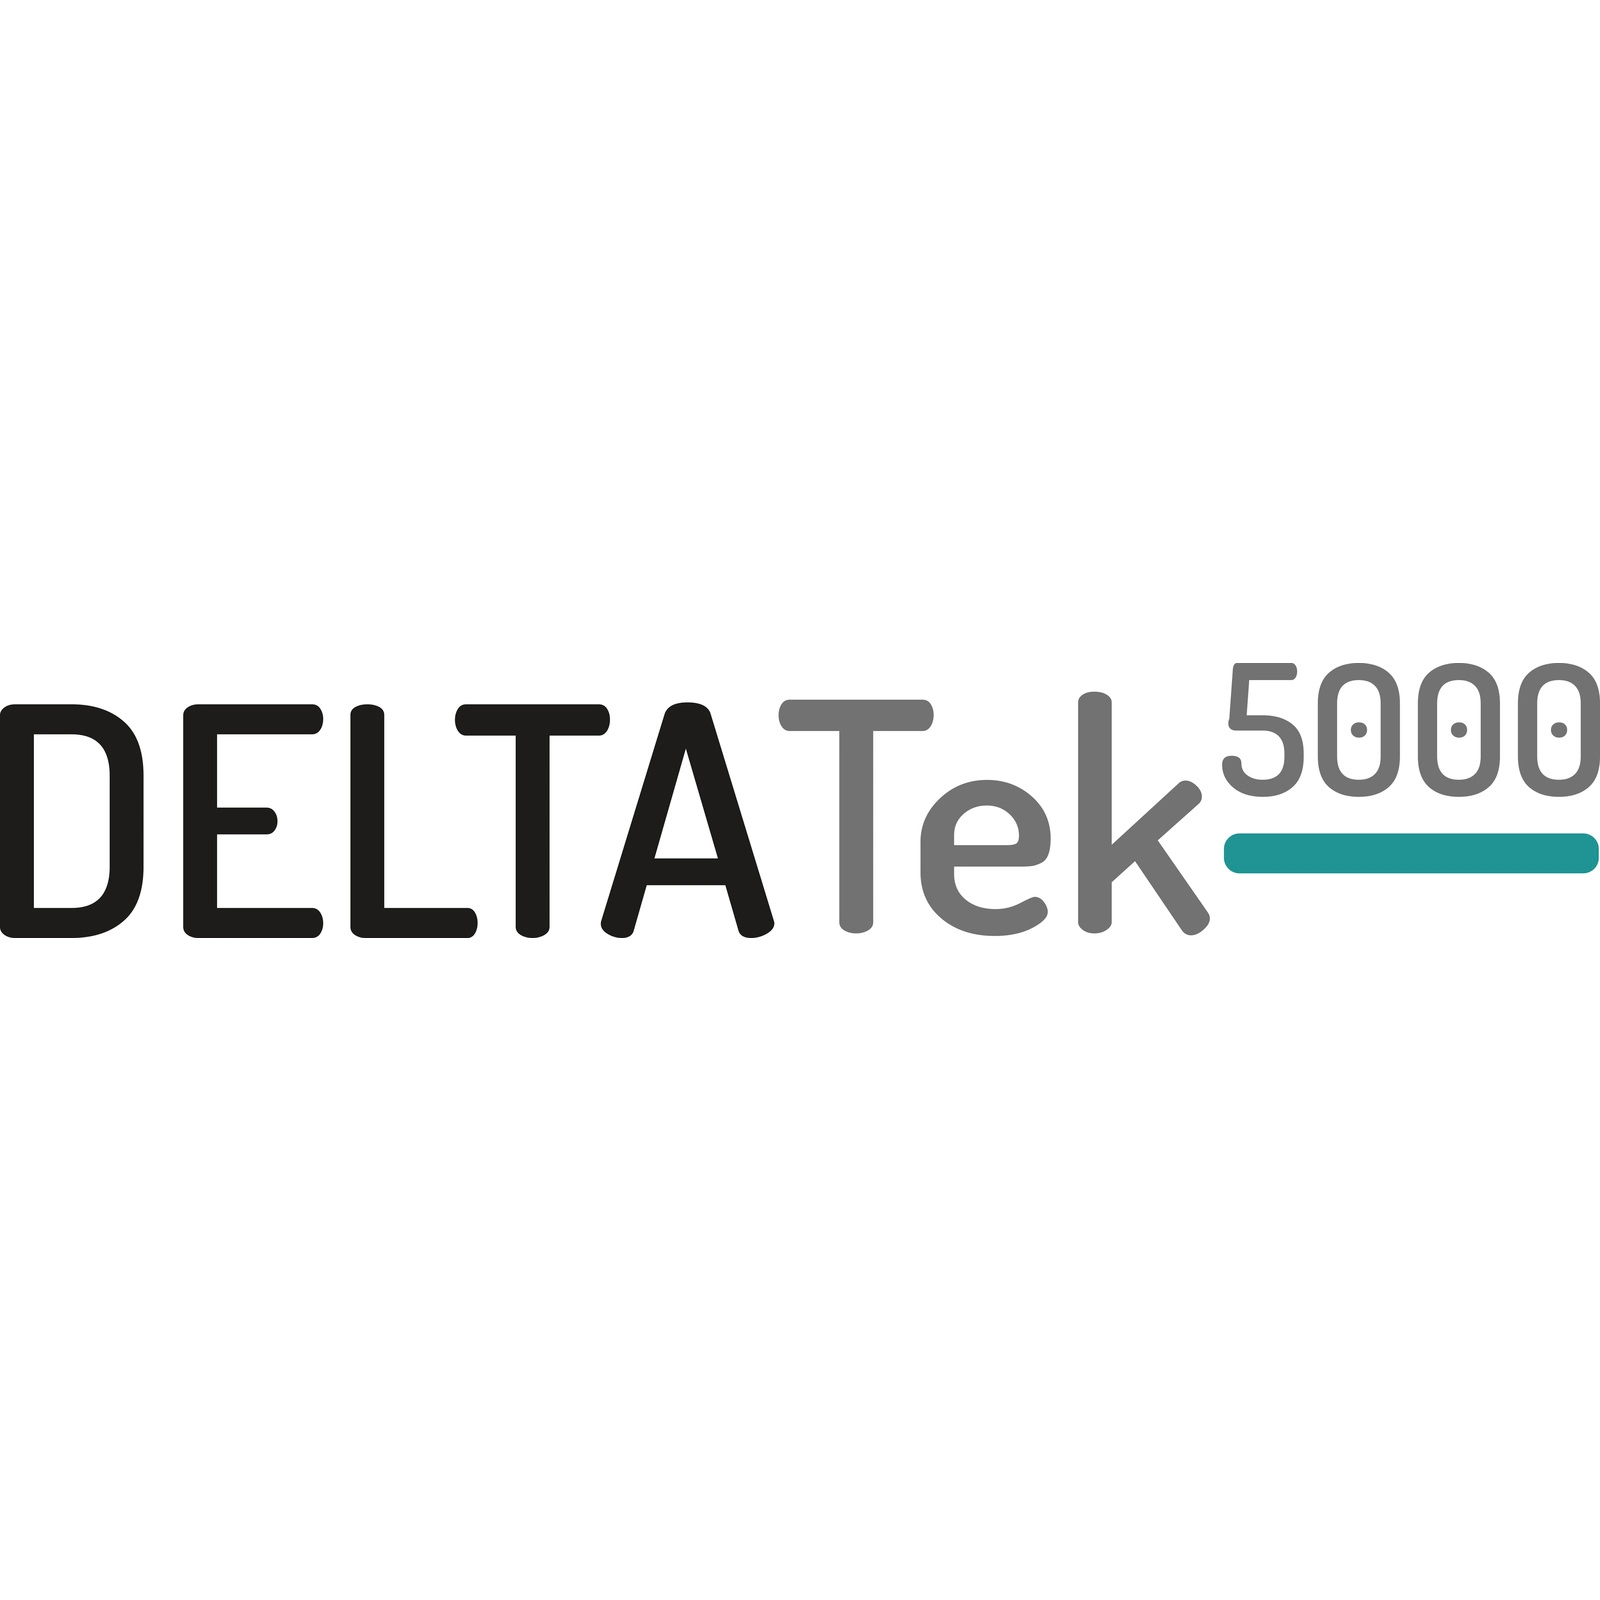 DeltaTek 5000